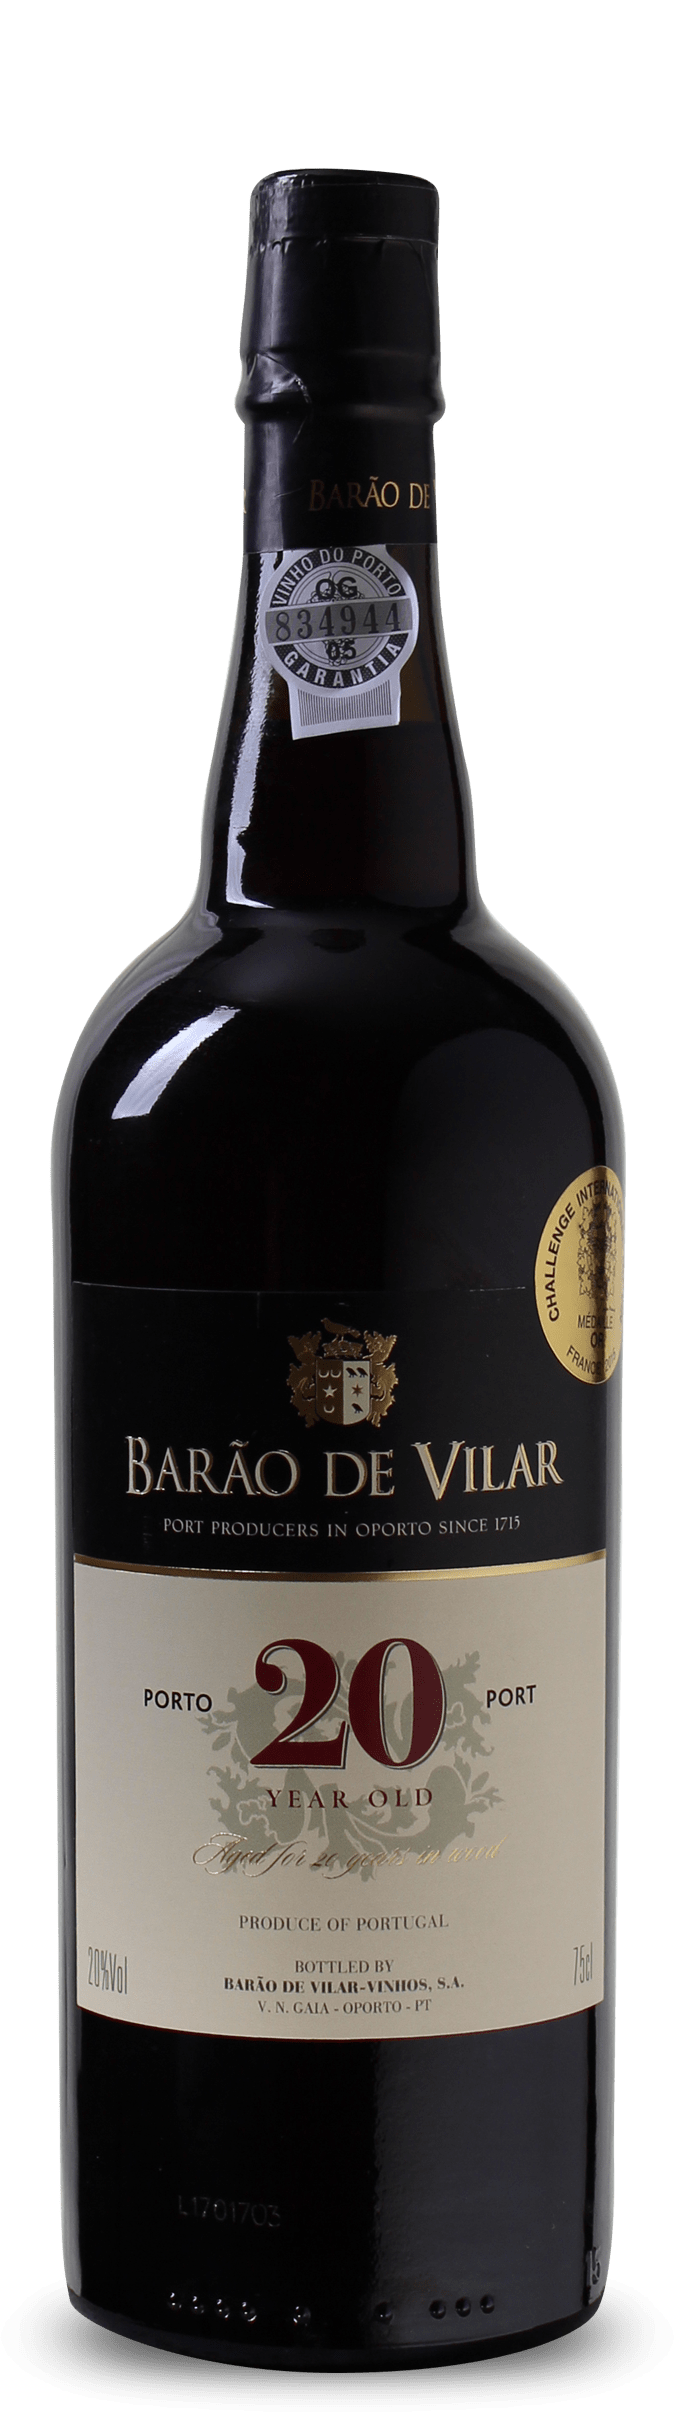 Barão de Vilar 20 Years old Port